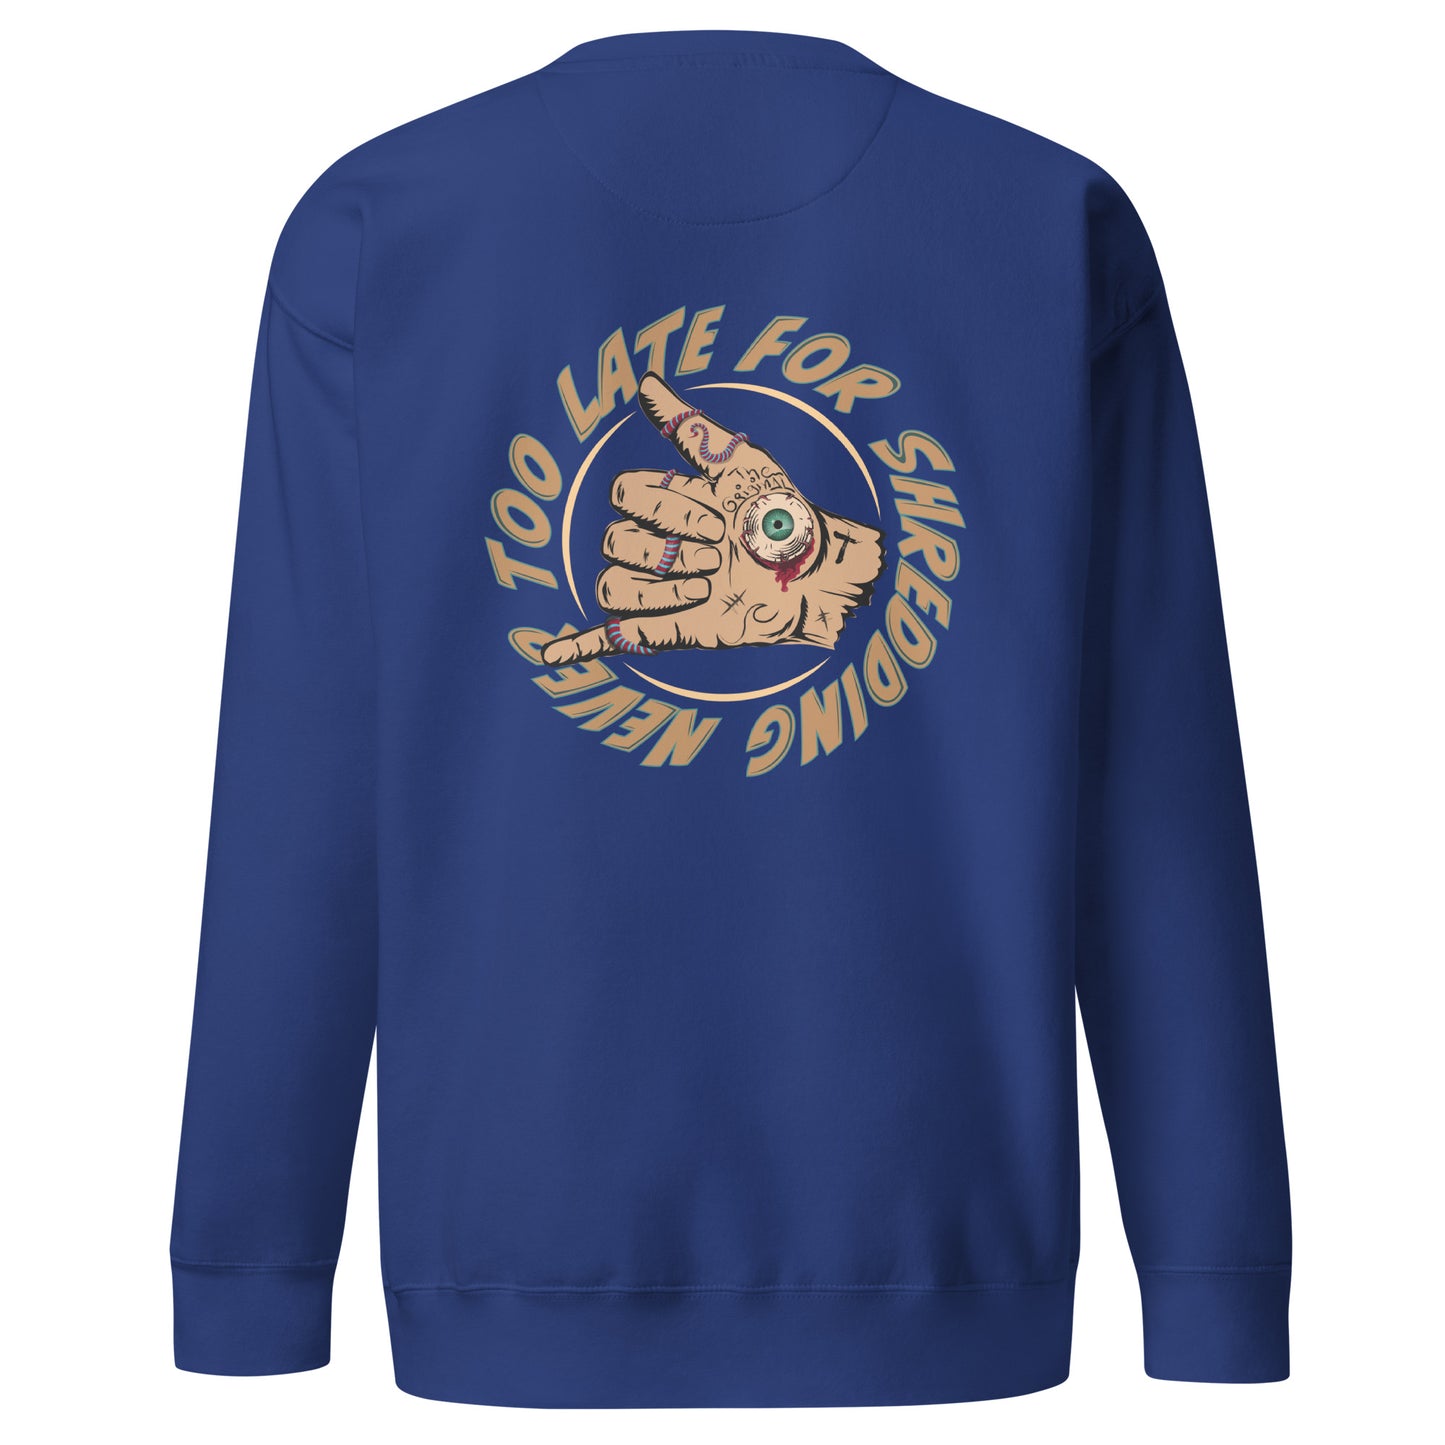 Sweatshirt Never Too Late shaka hand volcom style surfeur, avec le logo Late surfoard, sweat unisex de dos couleur bleu